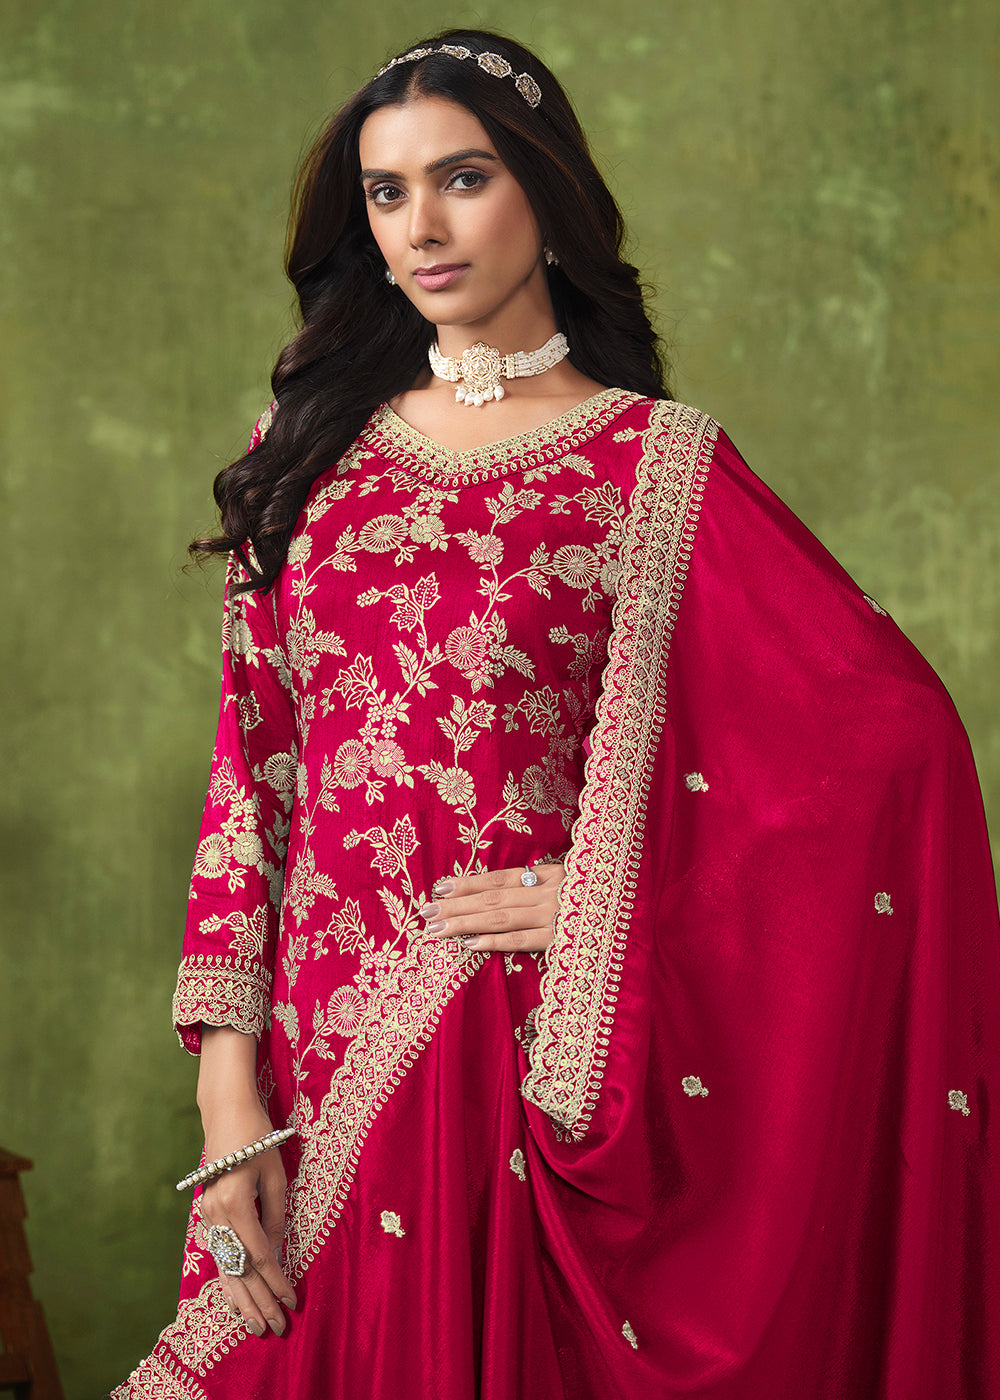 Buy Now Wedding Wear Pink Dola Silk Jacquard Palazzo Suit Online in USA, UK, Canada, Germany, Australia & Worldwide at Empress Clothing. 